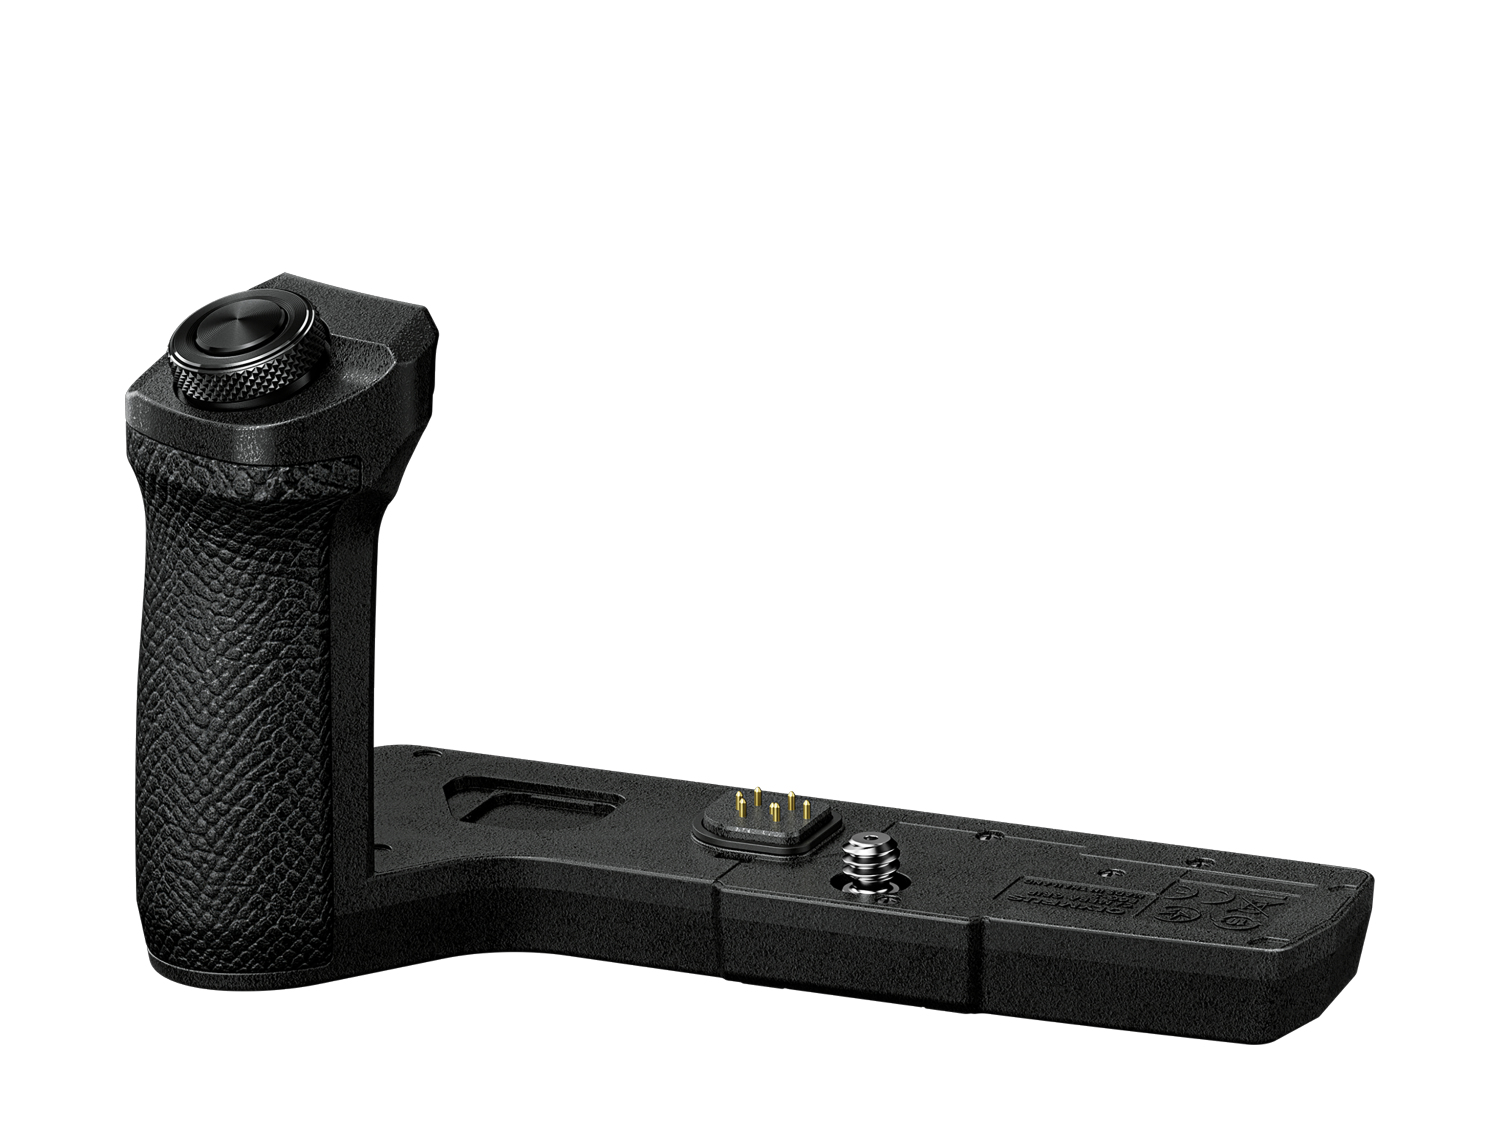 Photos - Camera Strap / Mount Olympus ECG‑5 Digital camera battery grip Black V332080BW000 